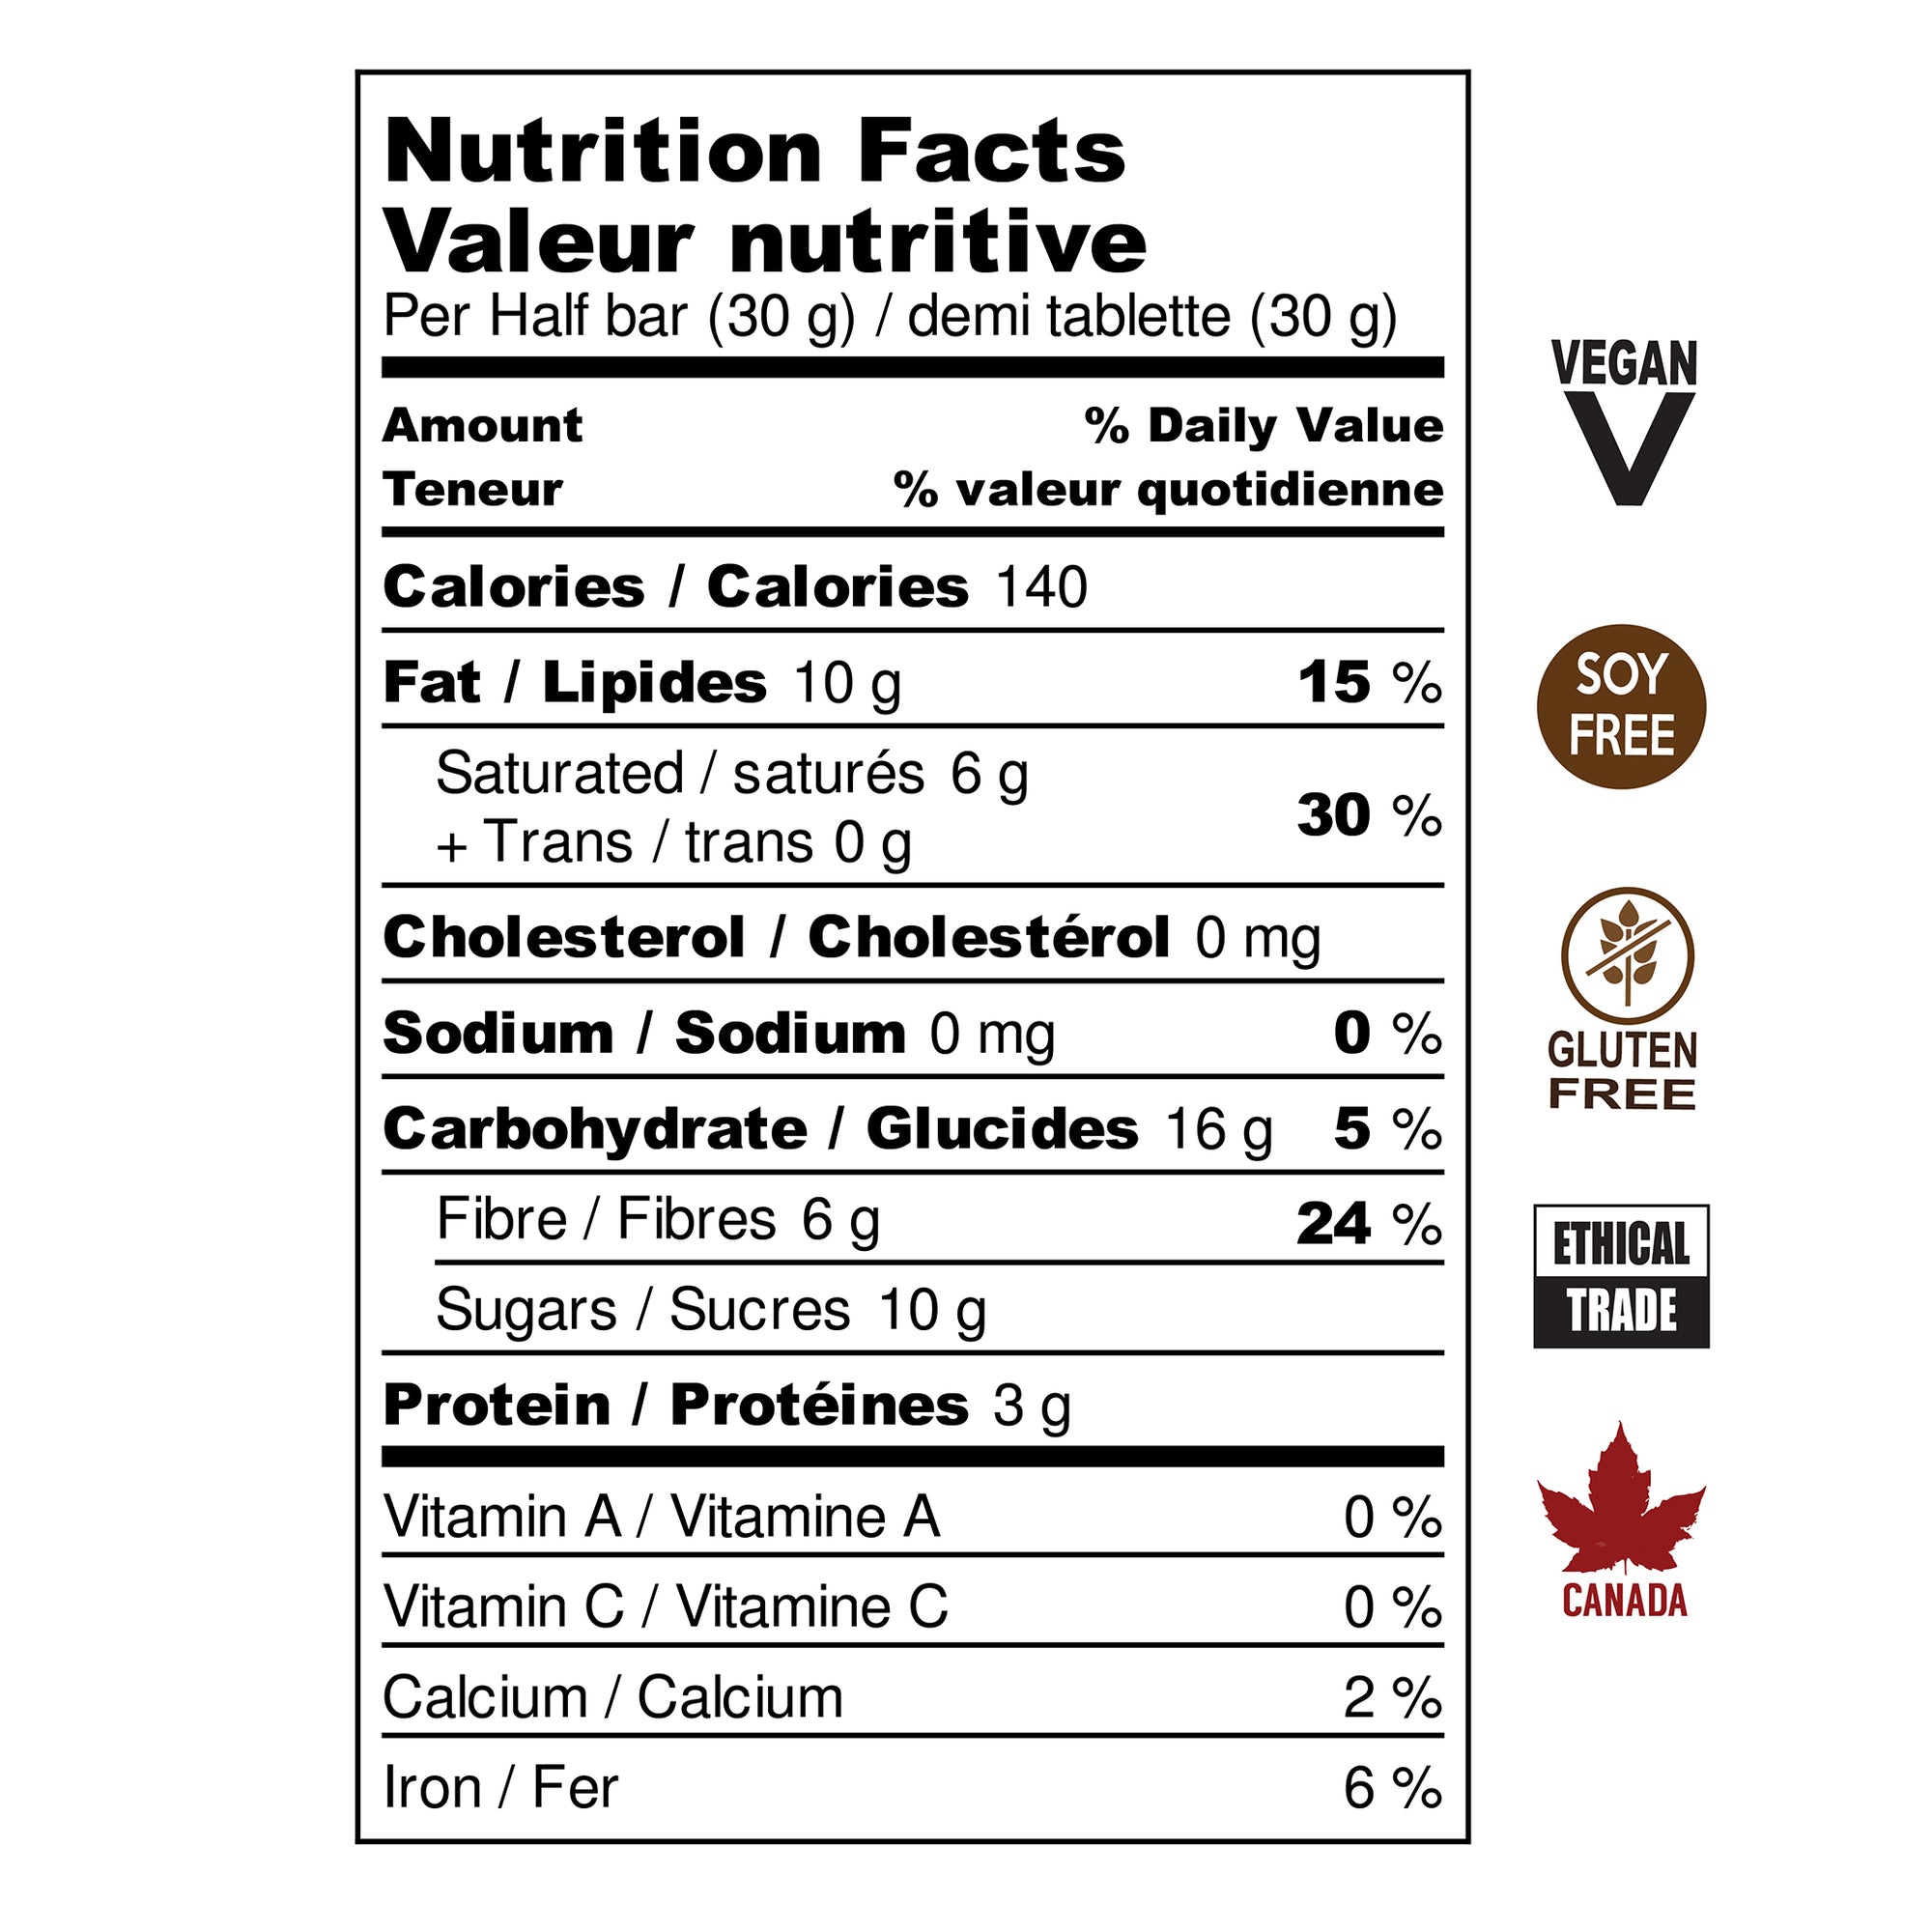 Tumaco 70% dark chocolate bar nutritional information. Vegan, Soy Free, Gluten Free, Ethical Trade, Made in Canada